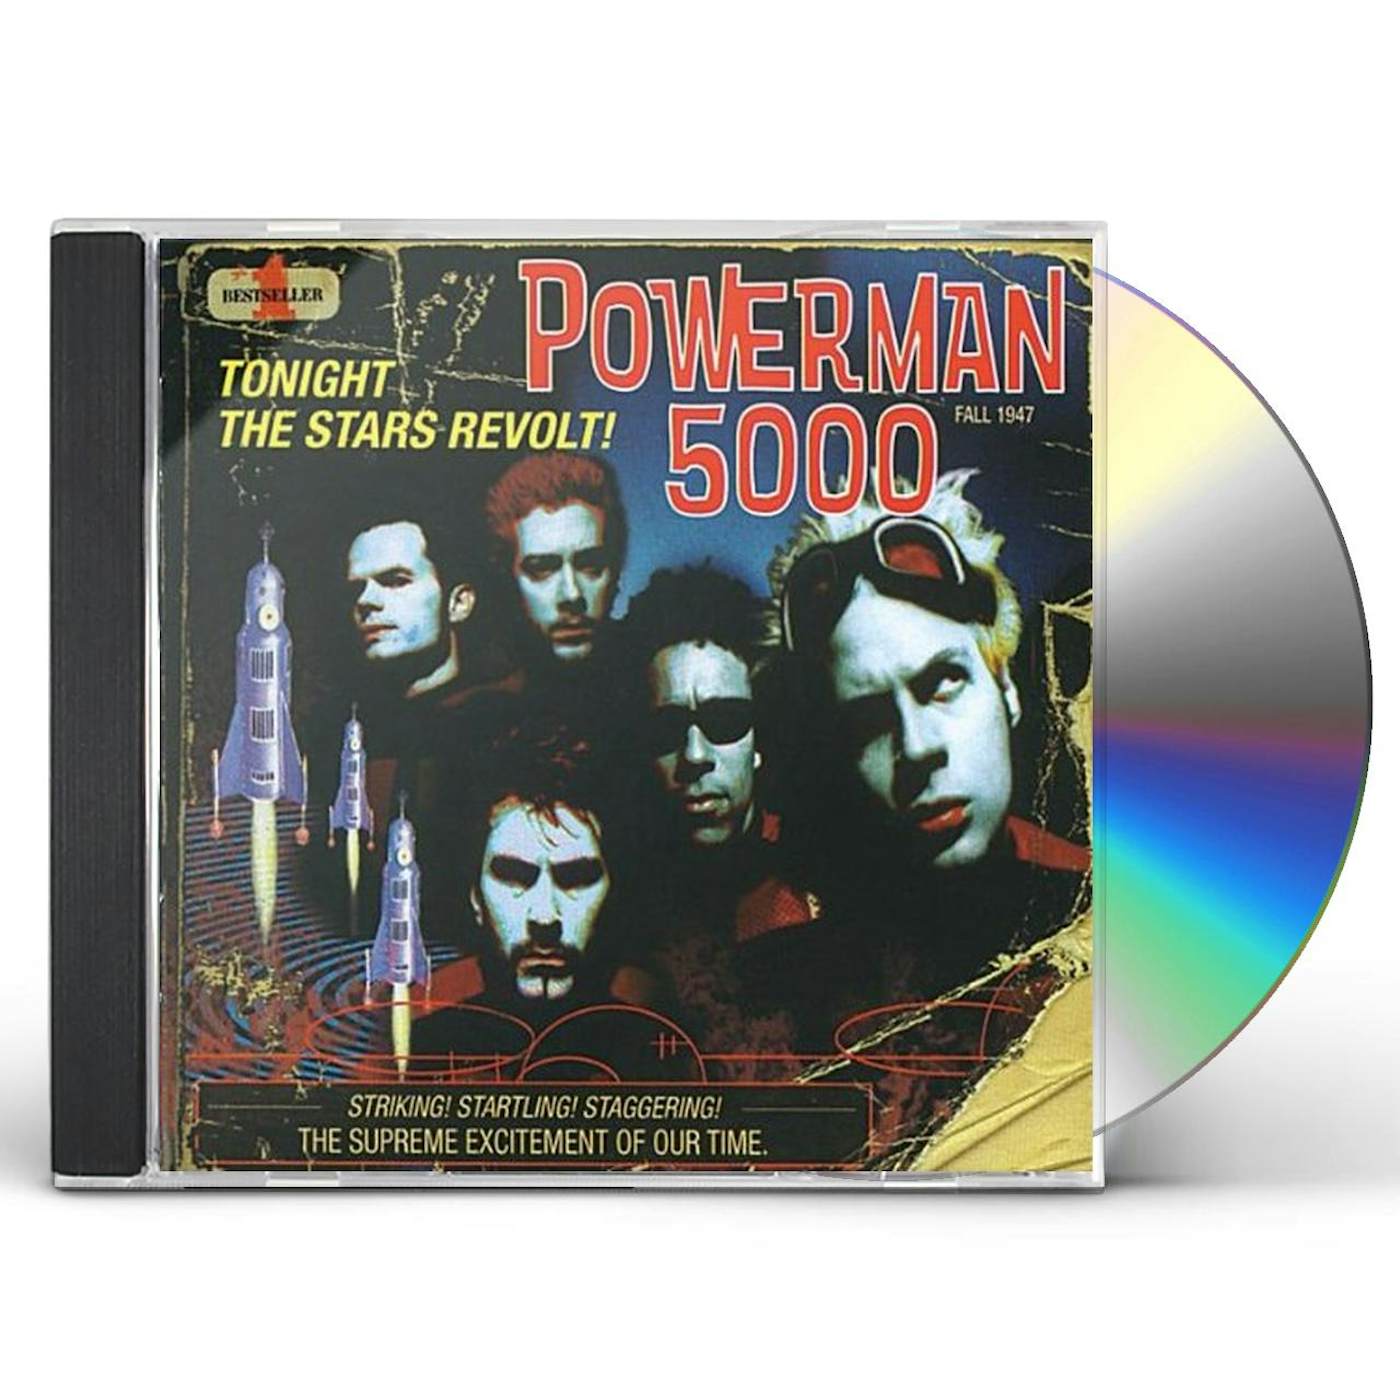 Powerman 5000 TONIGHT THE STARS REVOLT CD